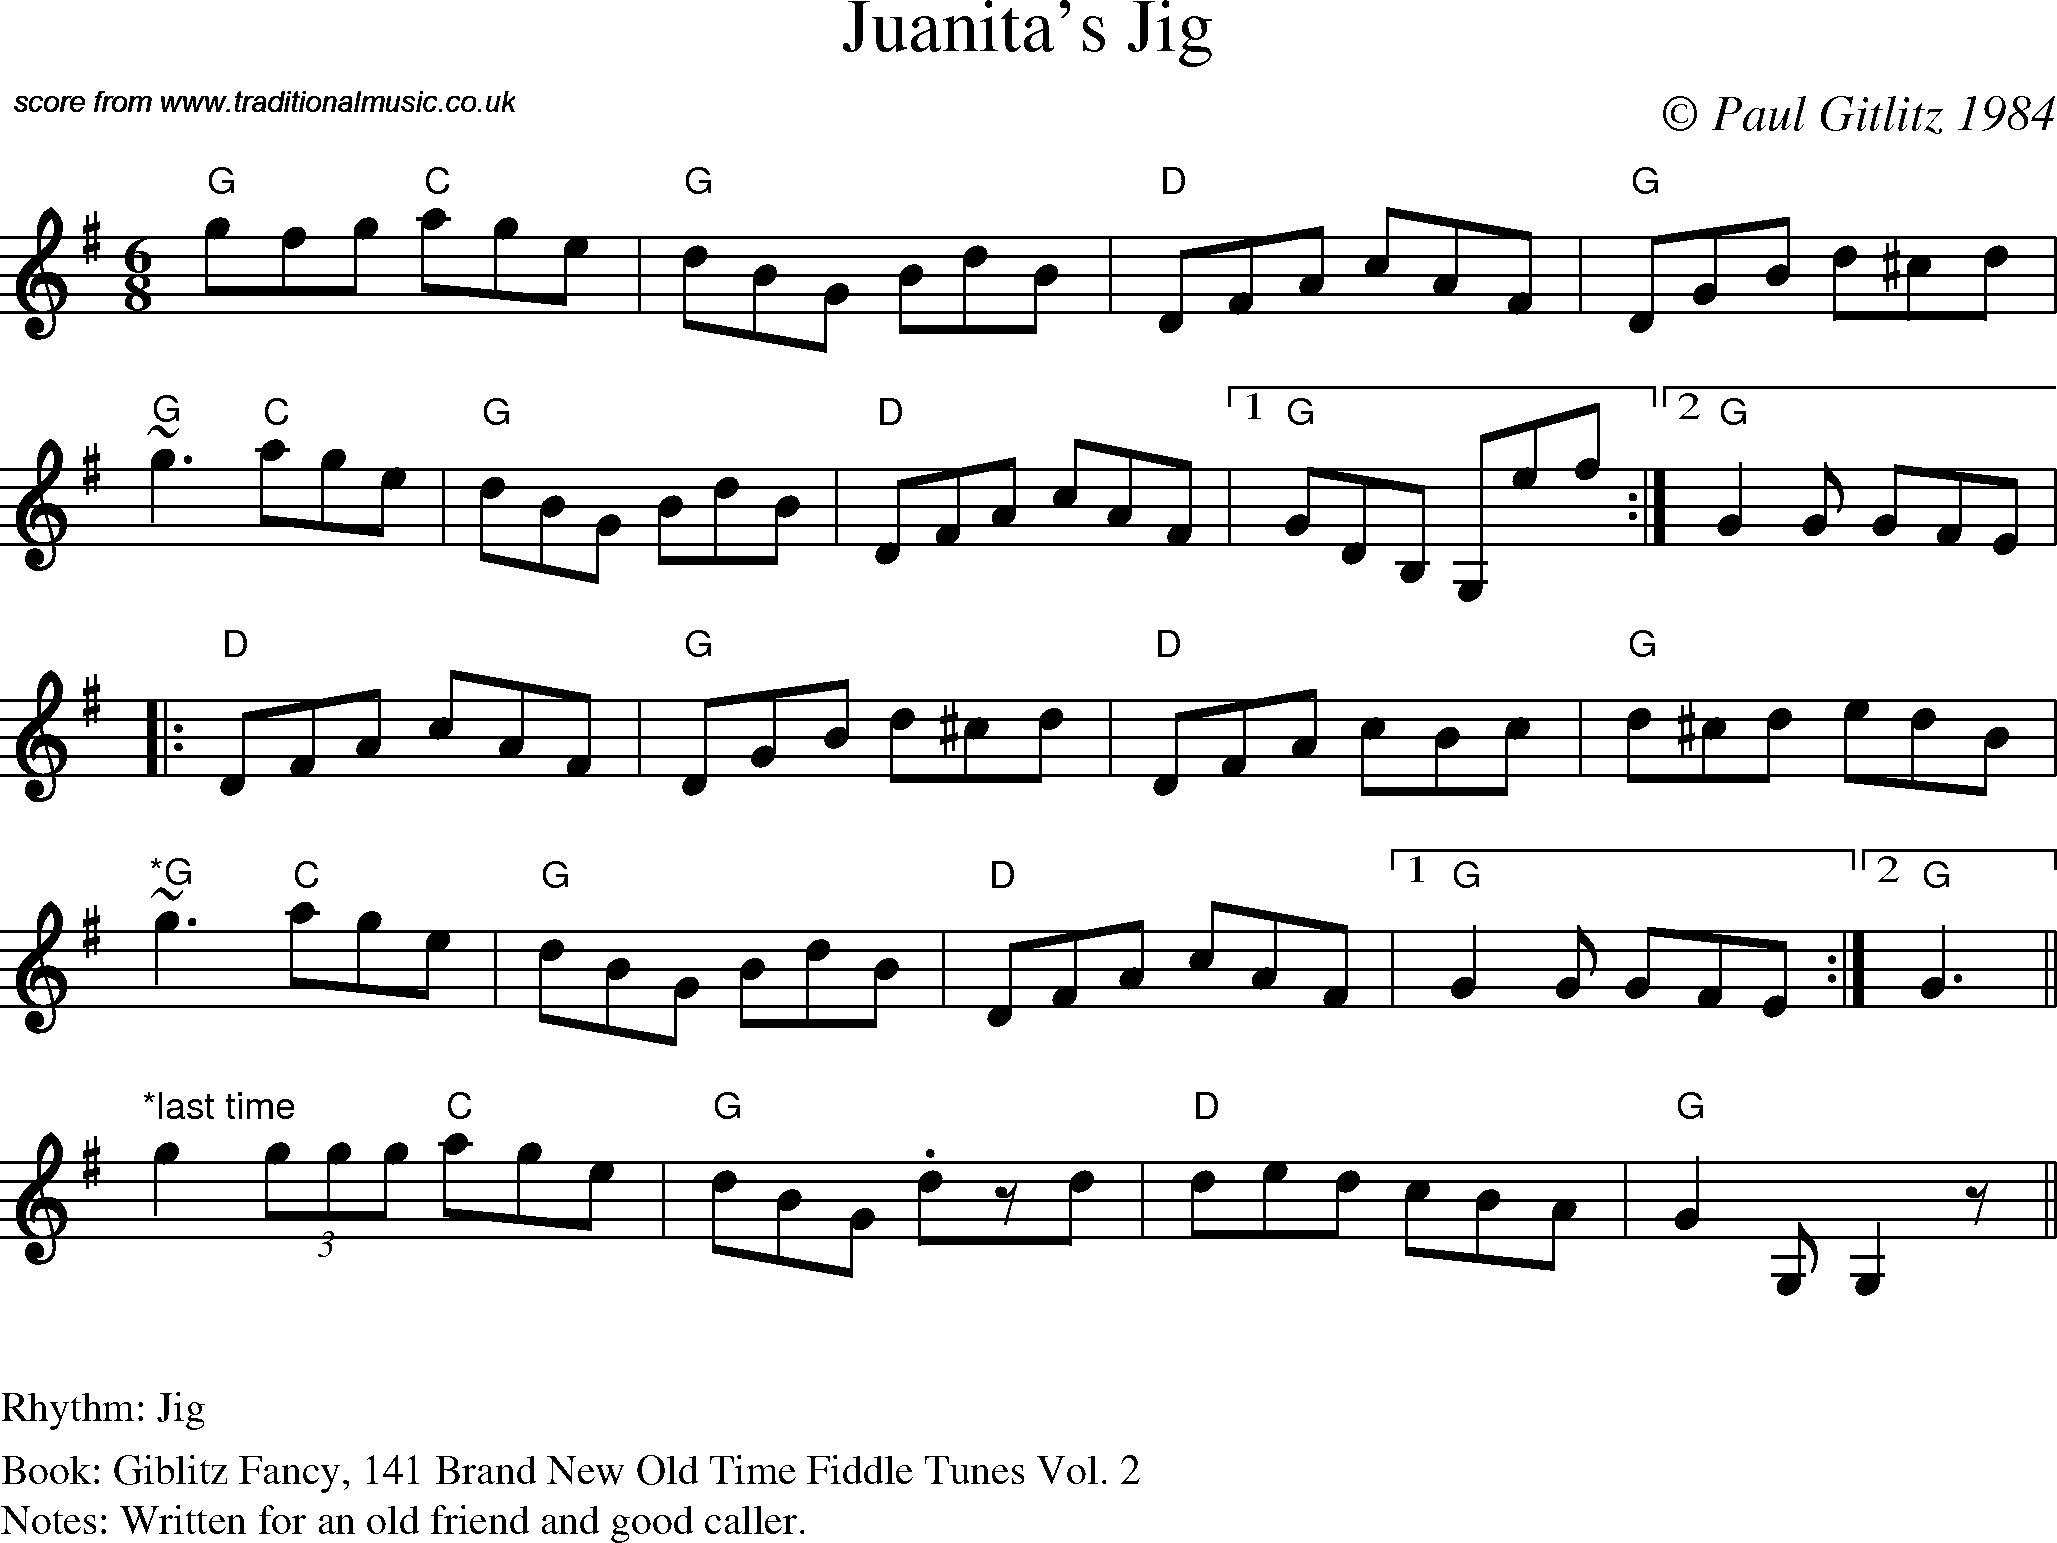 Sheet Music Score for Jig - Juanita's Jig